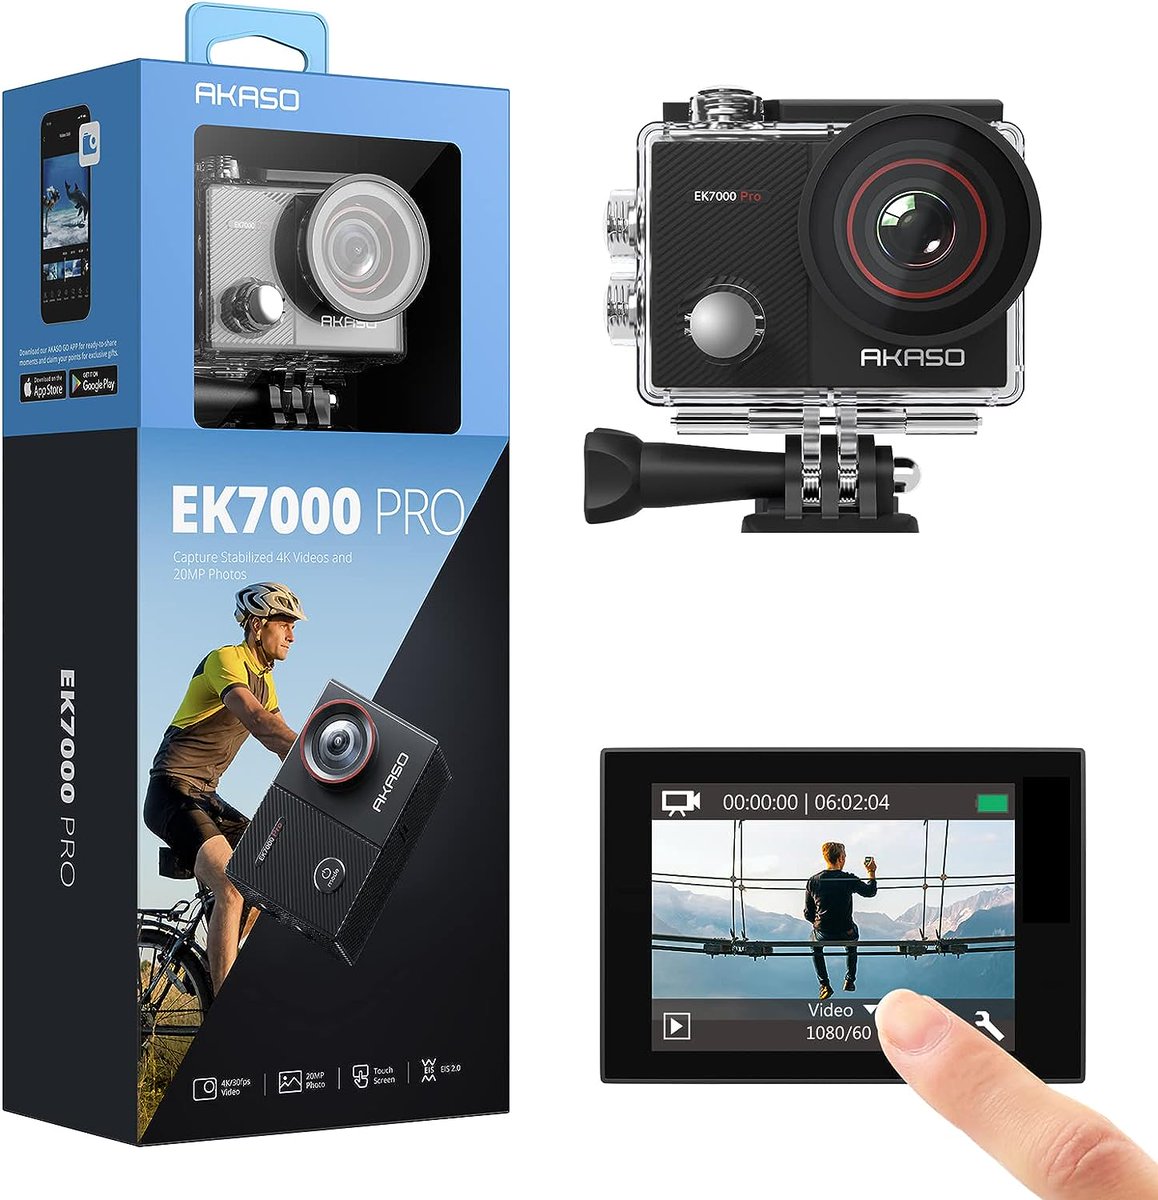 AKASO EK7000 Pro 4K Action Camera with Touch Screen ~ $64.99

amzn.to/4auxNbI

#couponcommunity #discounts #discountshopping #DiscountDeals #discountoffer #Deals #StealsAndDeals #AmazonDeals #Bargains #SaveMoney #ClearanceSale #LimitedTimeOffer #FlashSale 
#ad